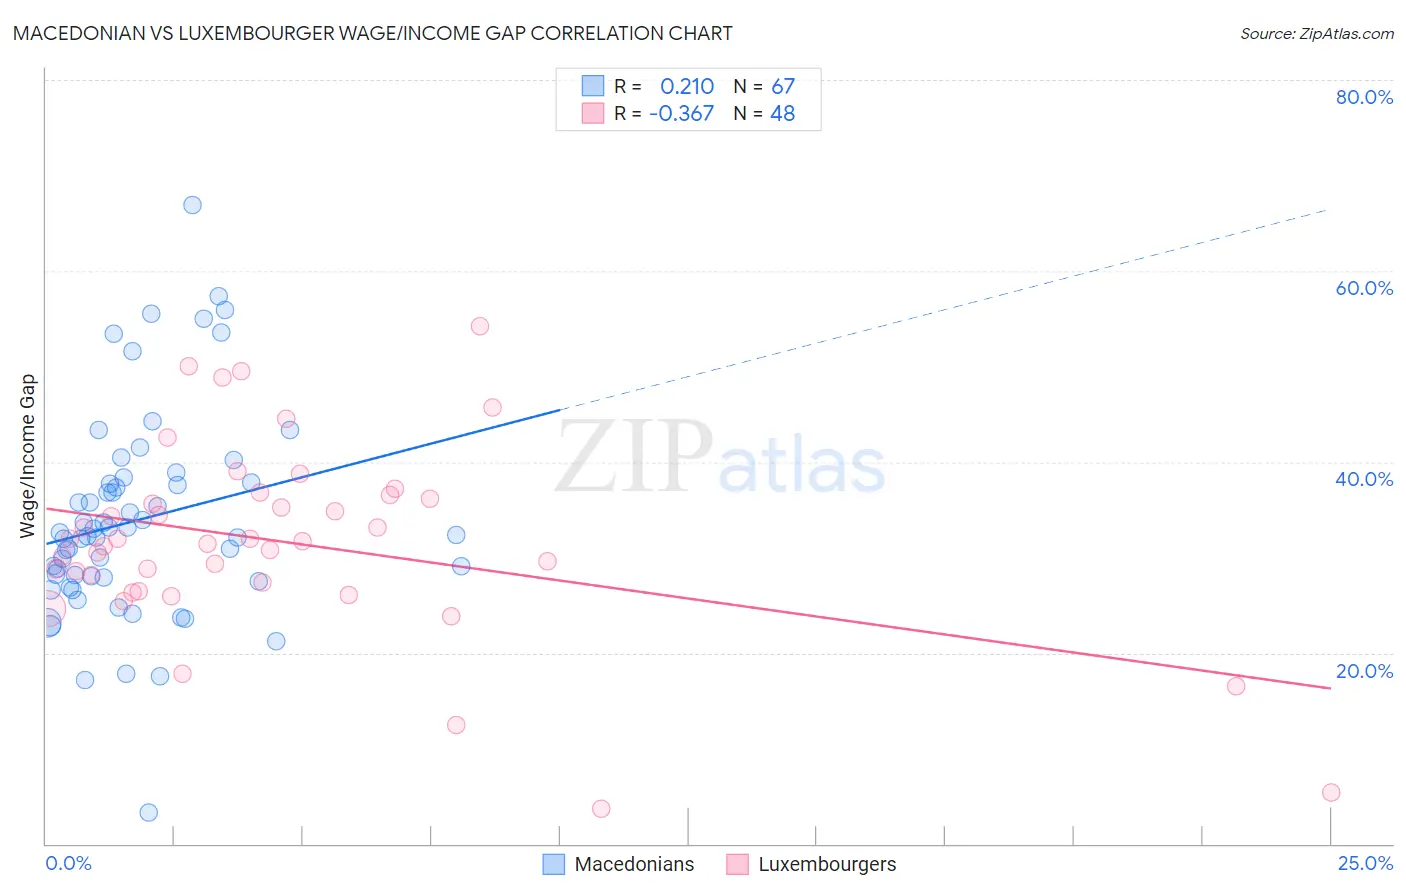 Macedonian vs Luxembourger Wage/Income Gap